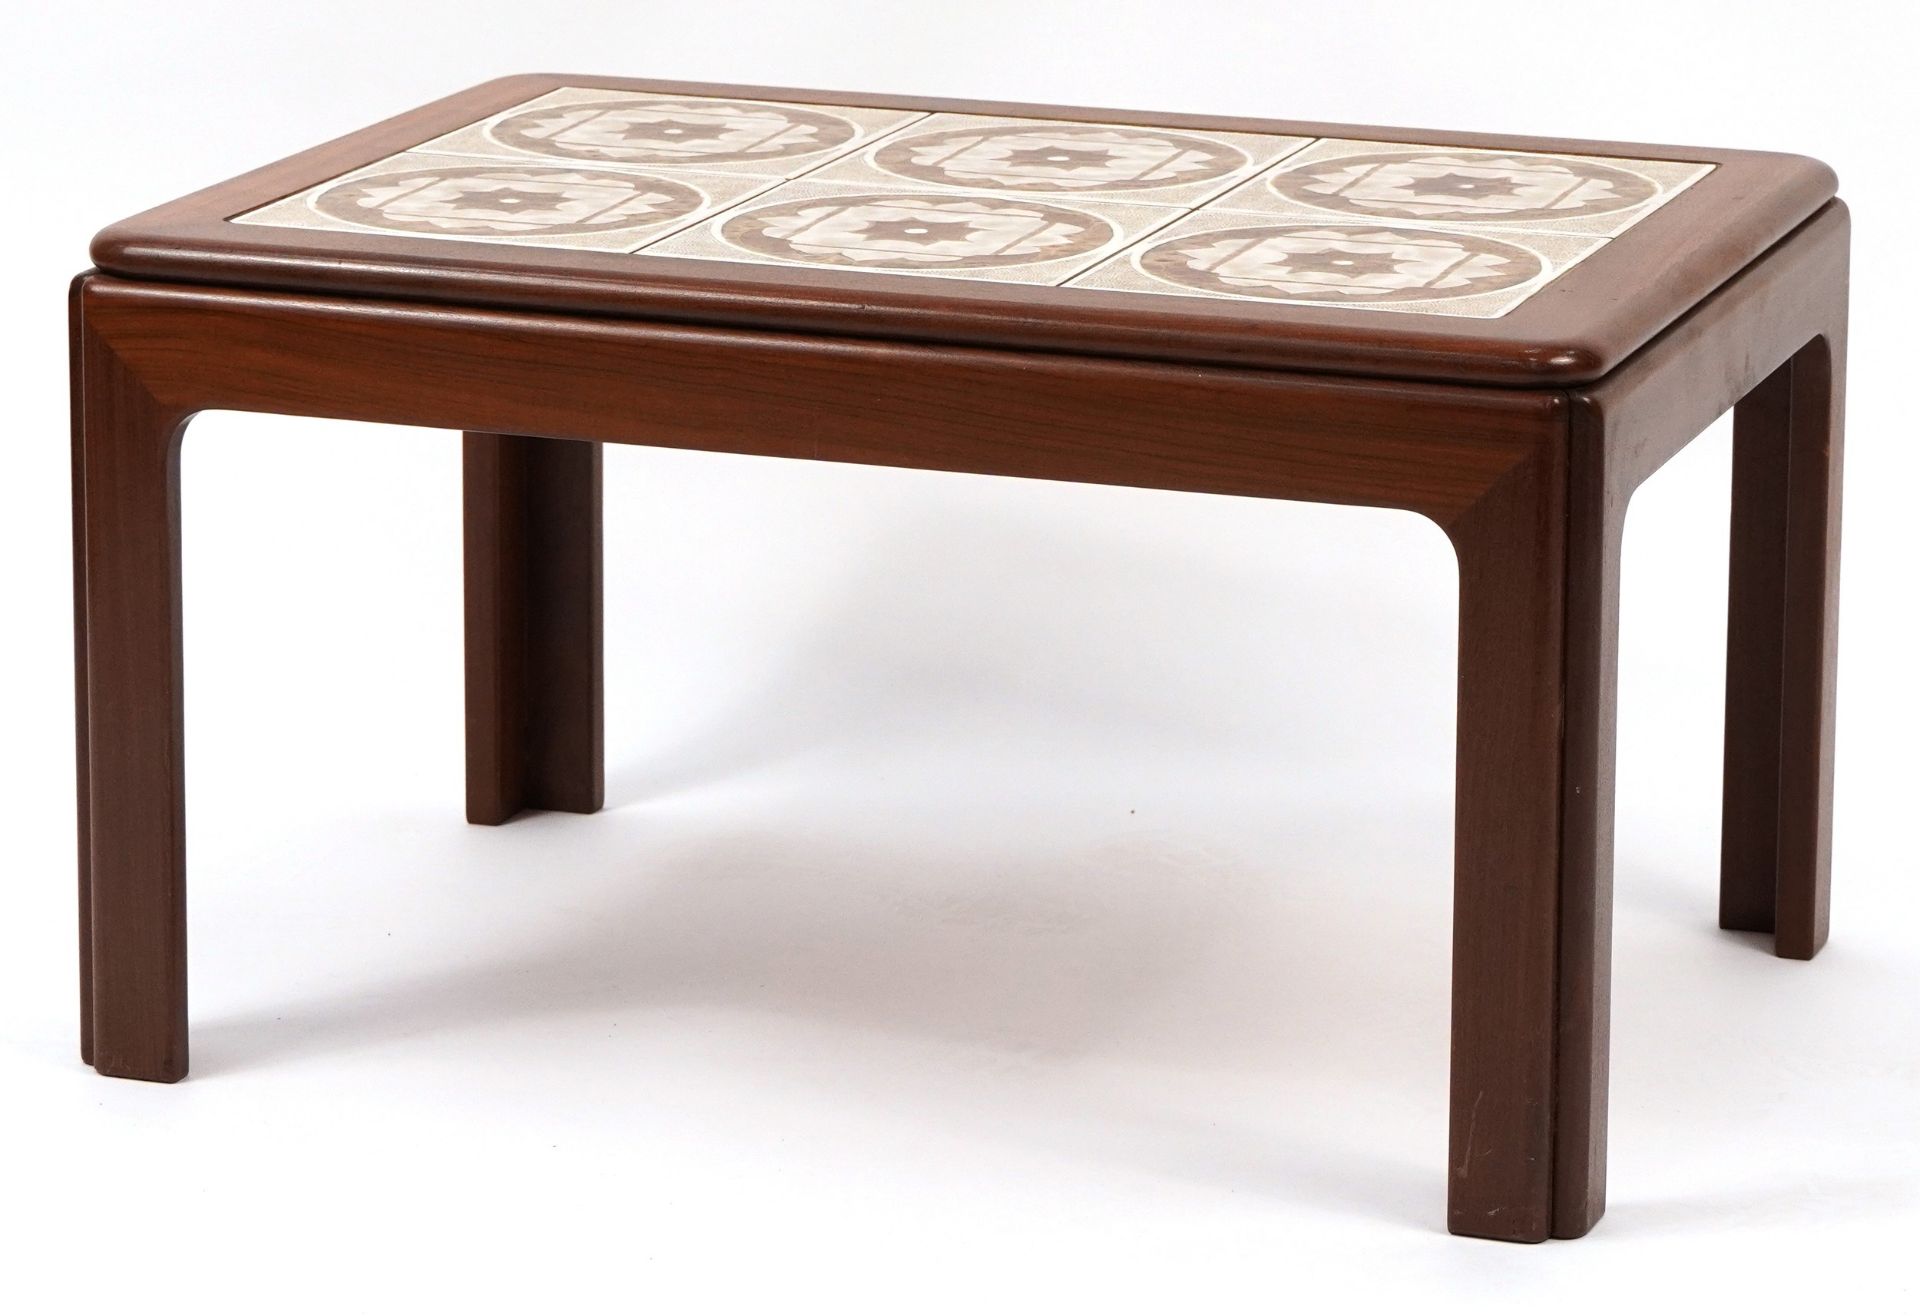 Mid century teak tile top coffee table, probably G Plan, 40cm H x 71cm W x 51cm D